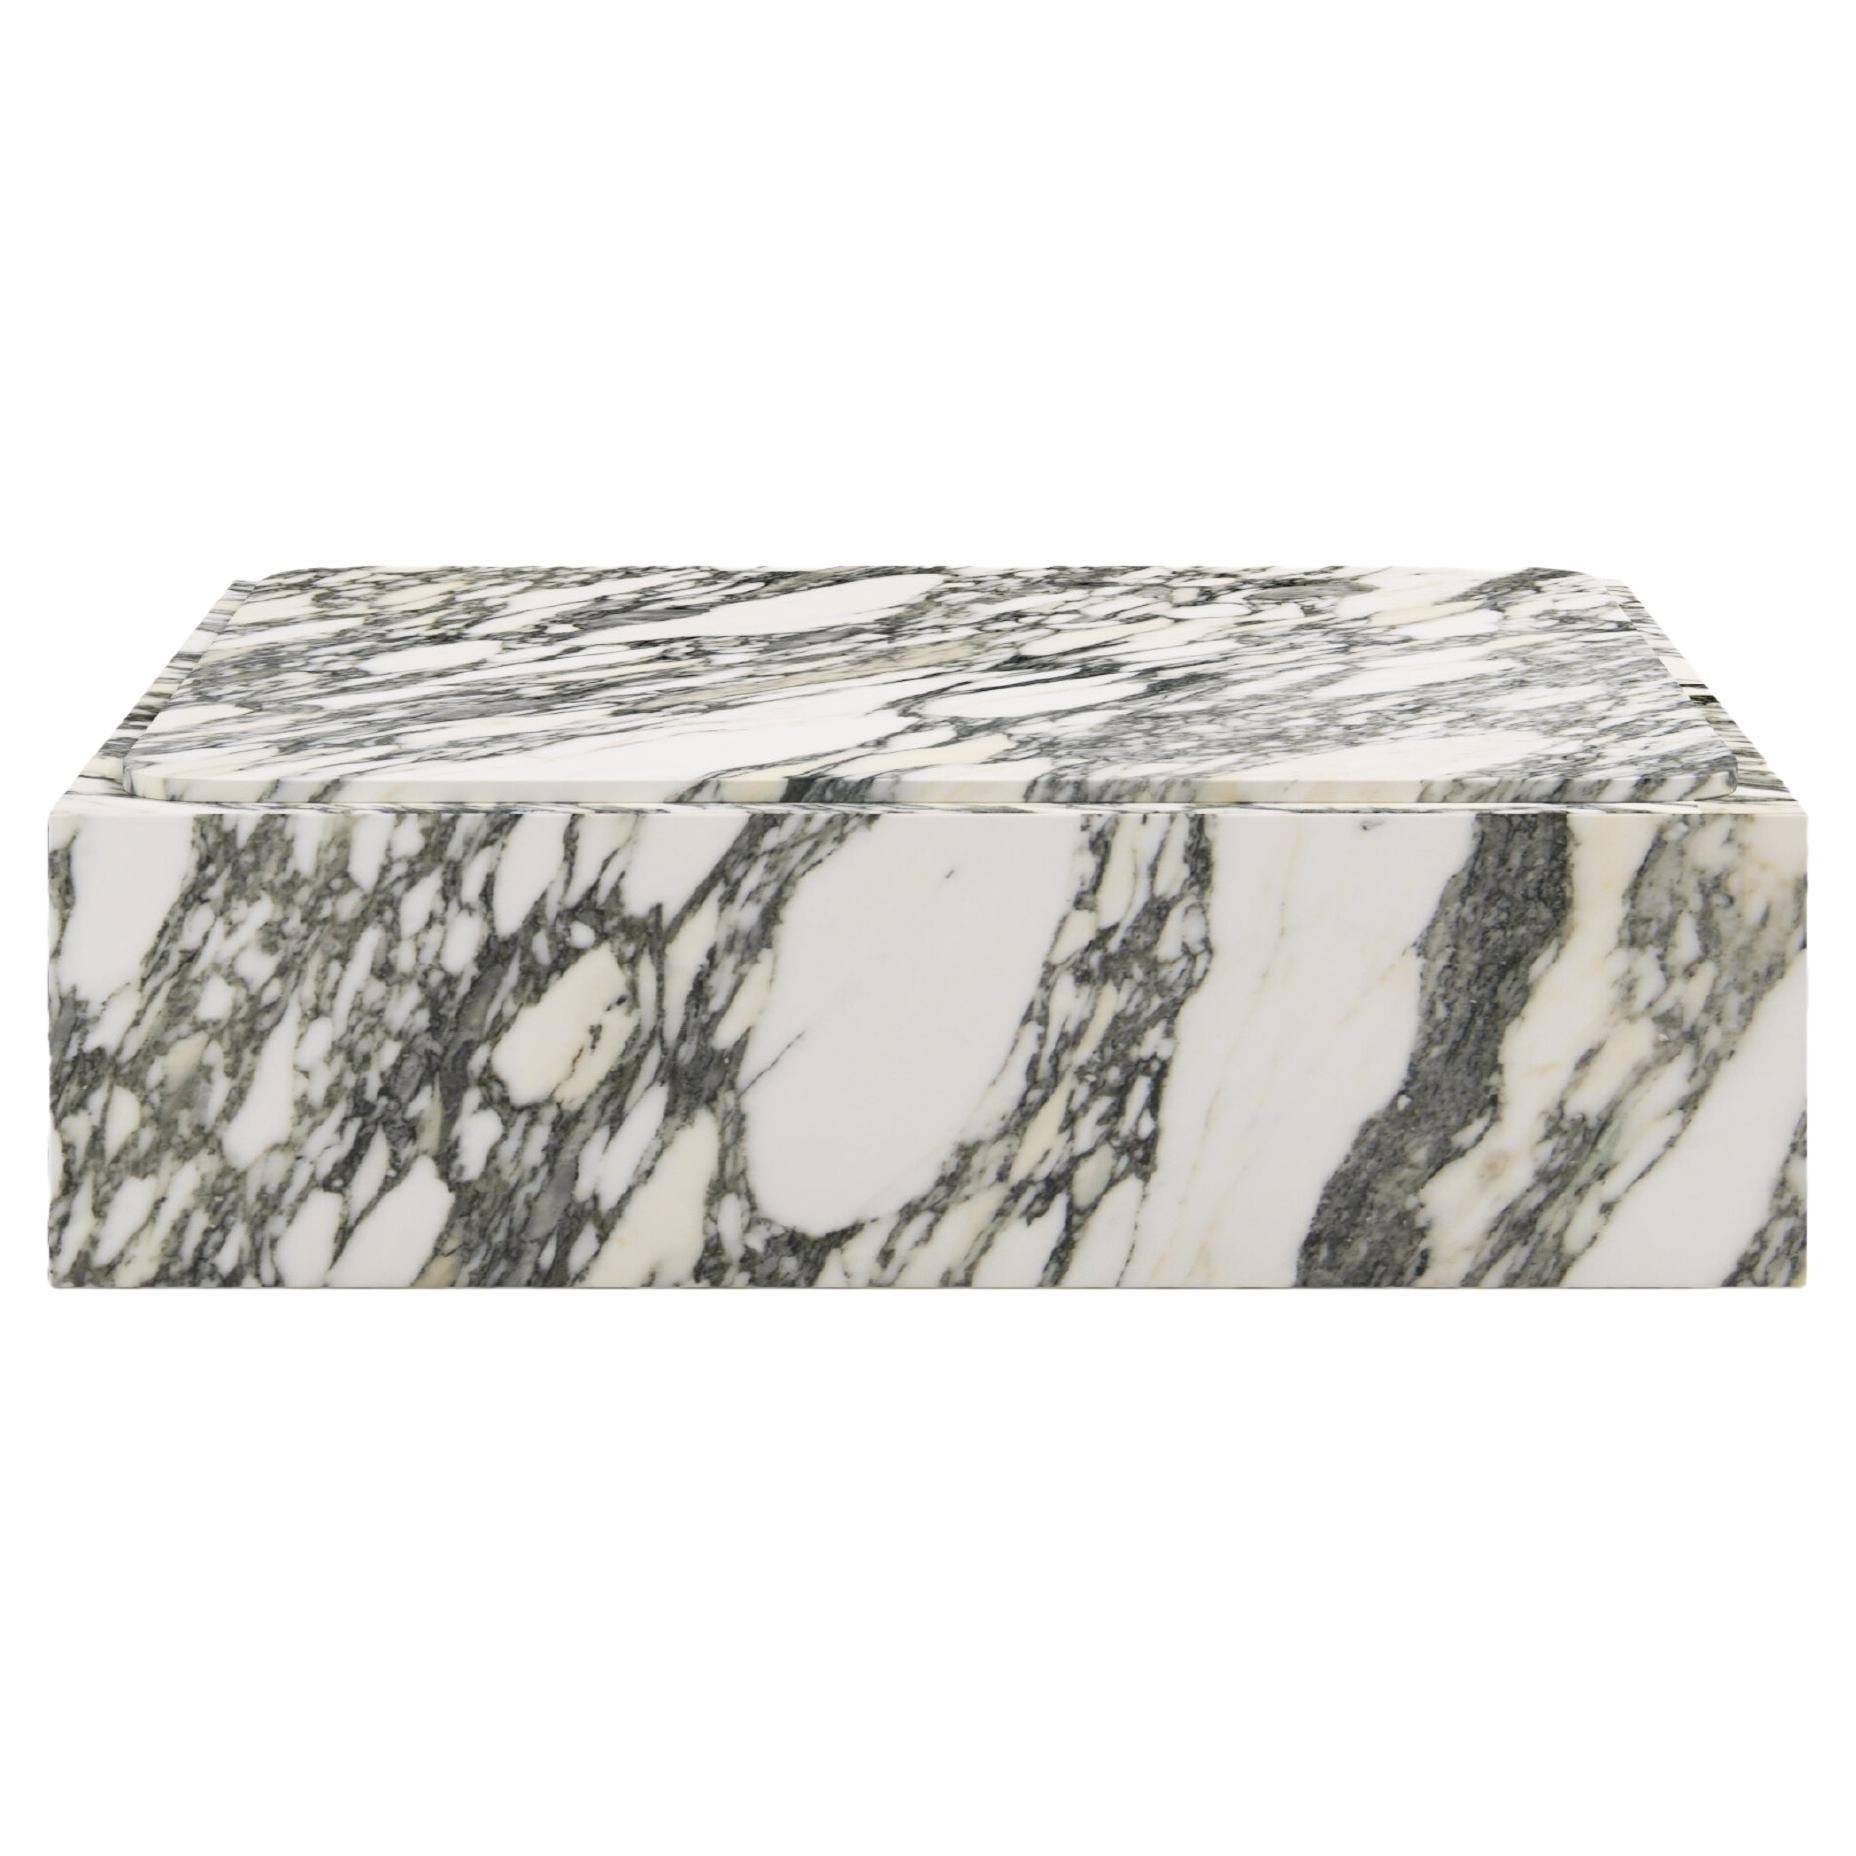 FORM(LA) Cubo Square Plinth Coffee Table 42”L x 42"W x 13”H Arabescato Marble For Sale